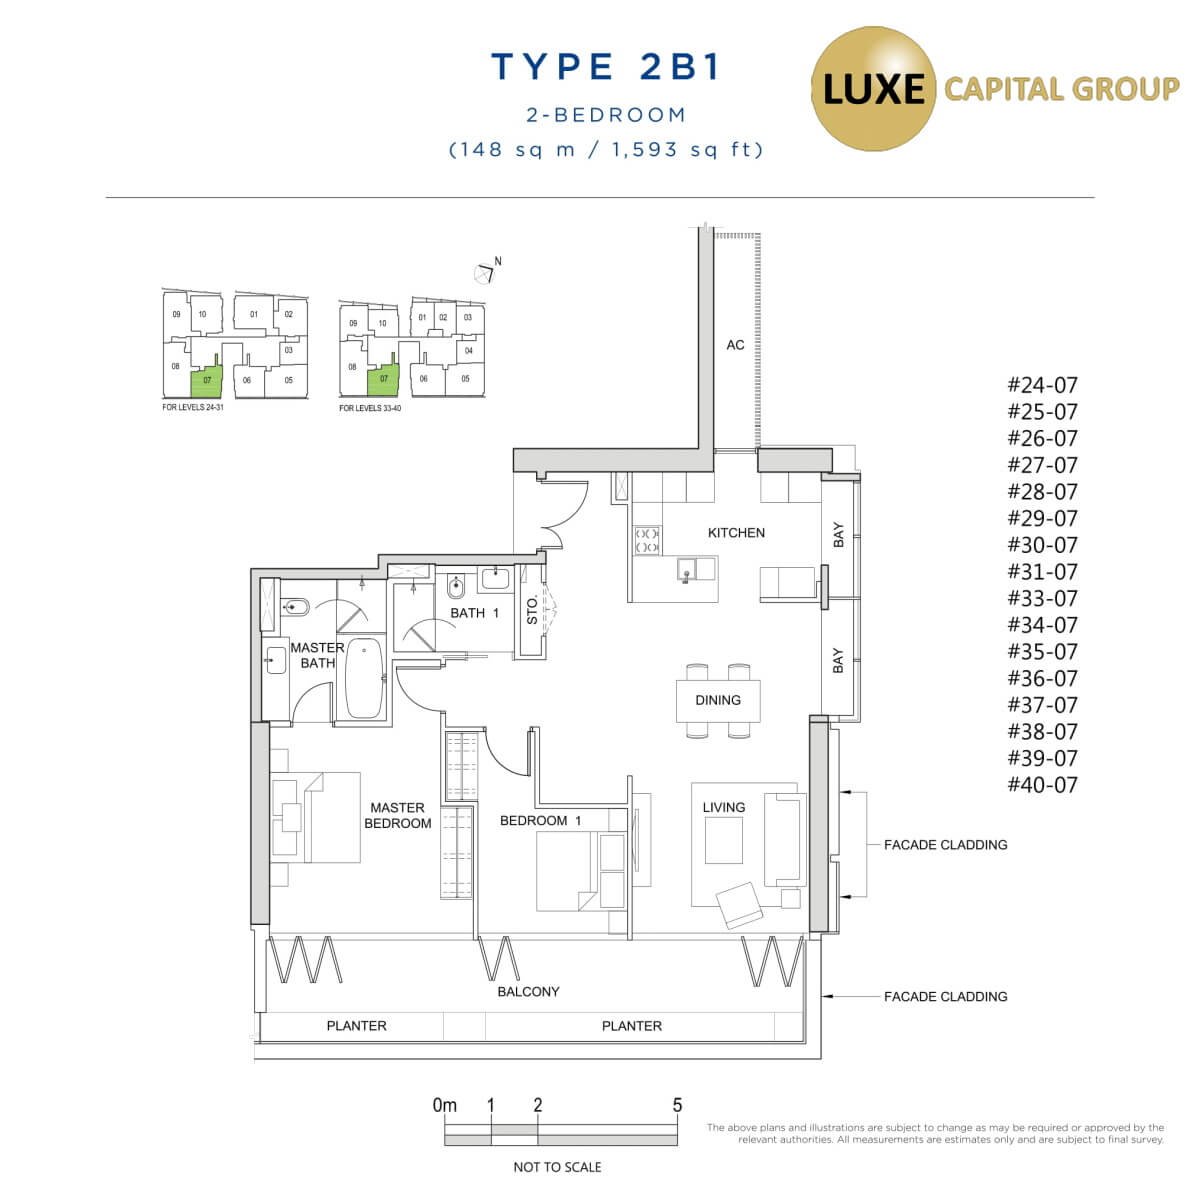 South Beach Residences Floorplan - Type 2B1 - 2 BR